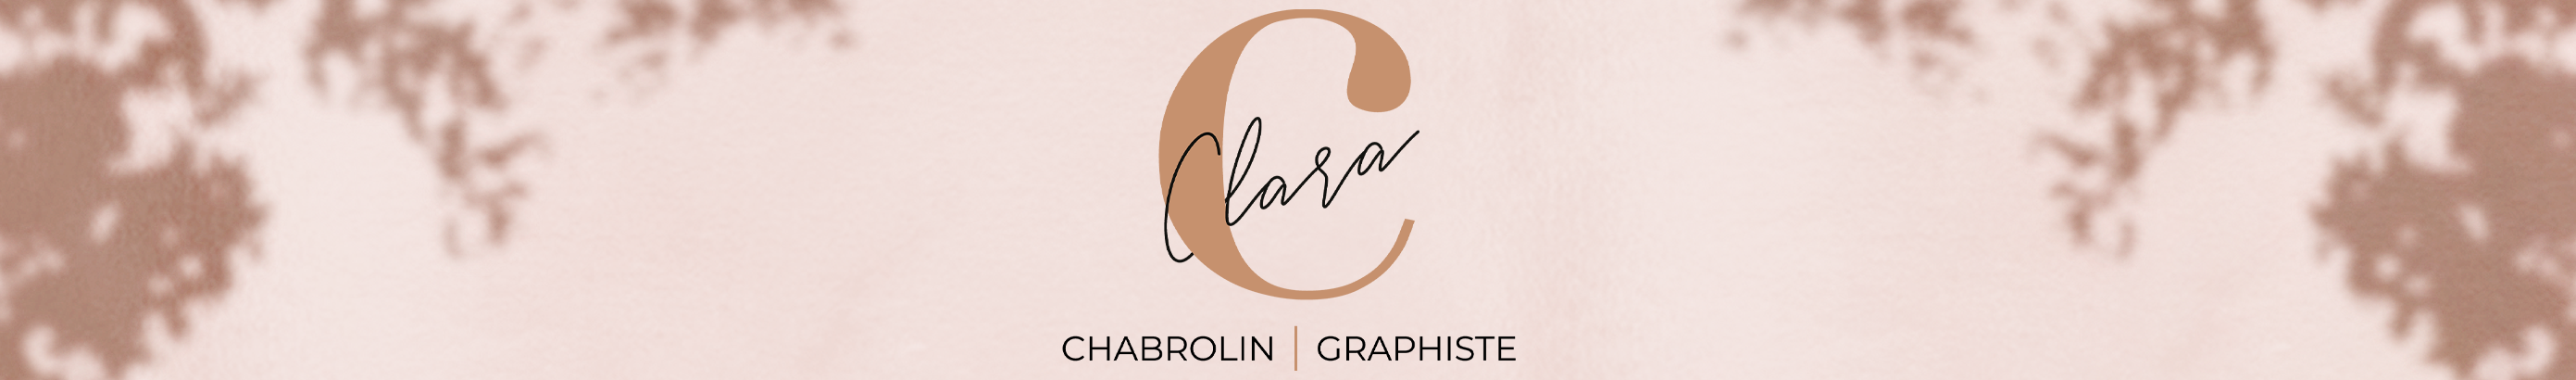 Banner profilu uživatele Clara Chabrolin